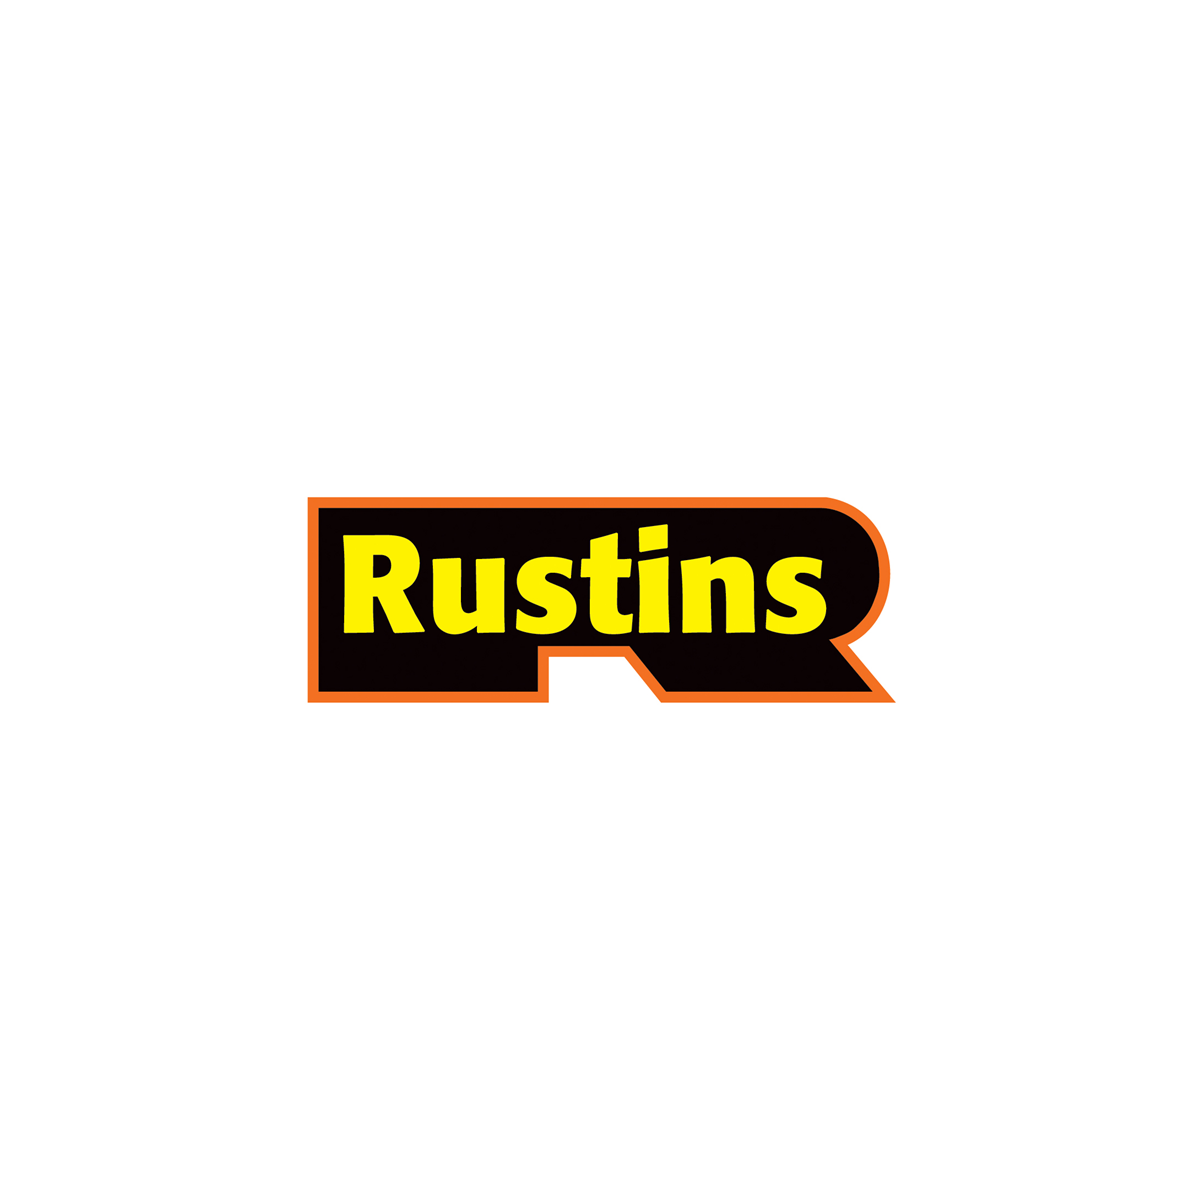 Where to buy Rustins Masonry Paint